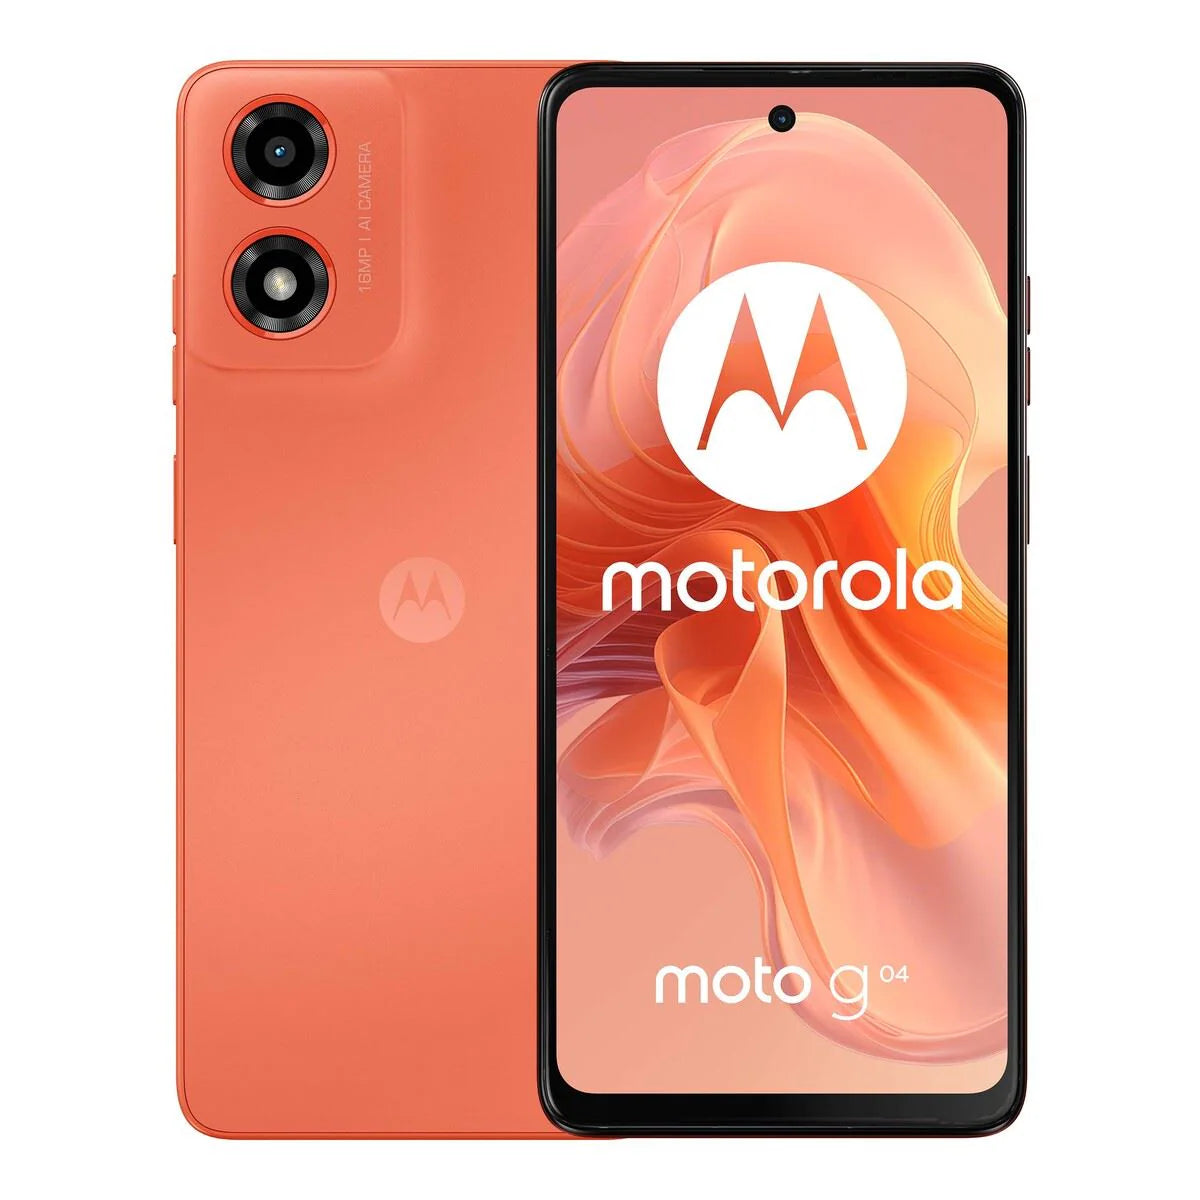 Motorola Teléfono Celular G04, 128GB